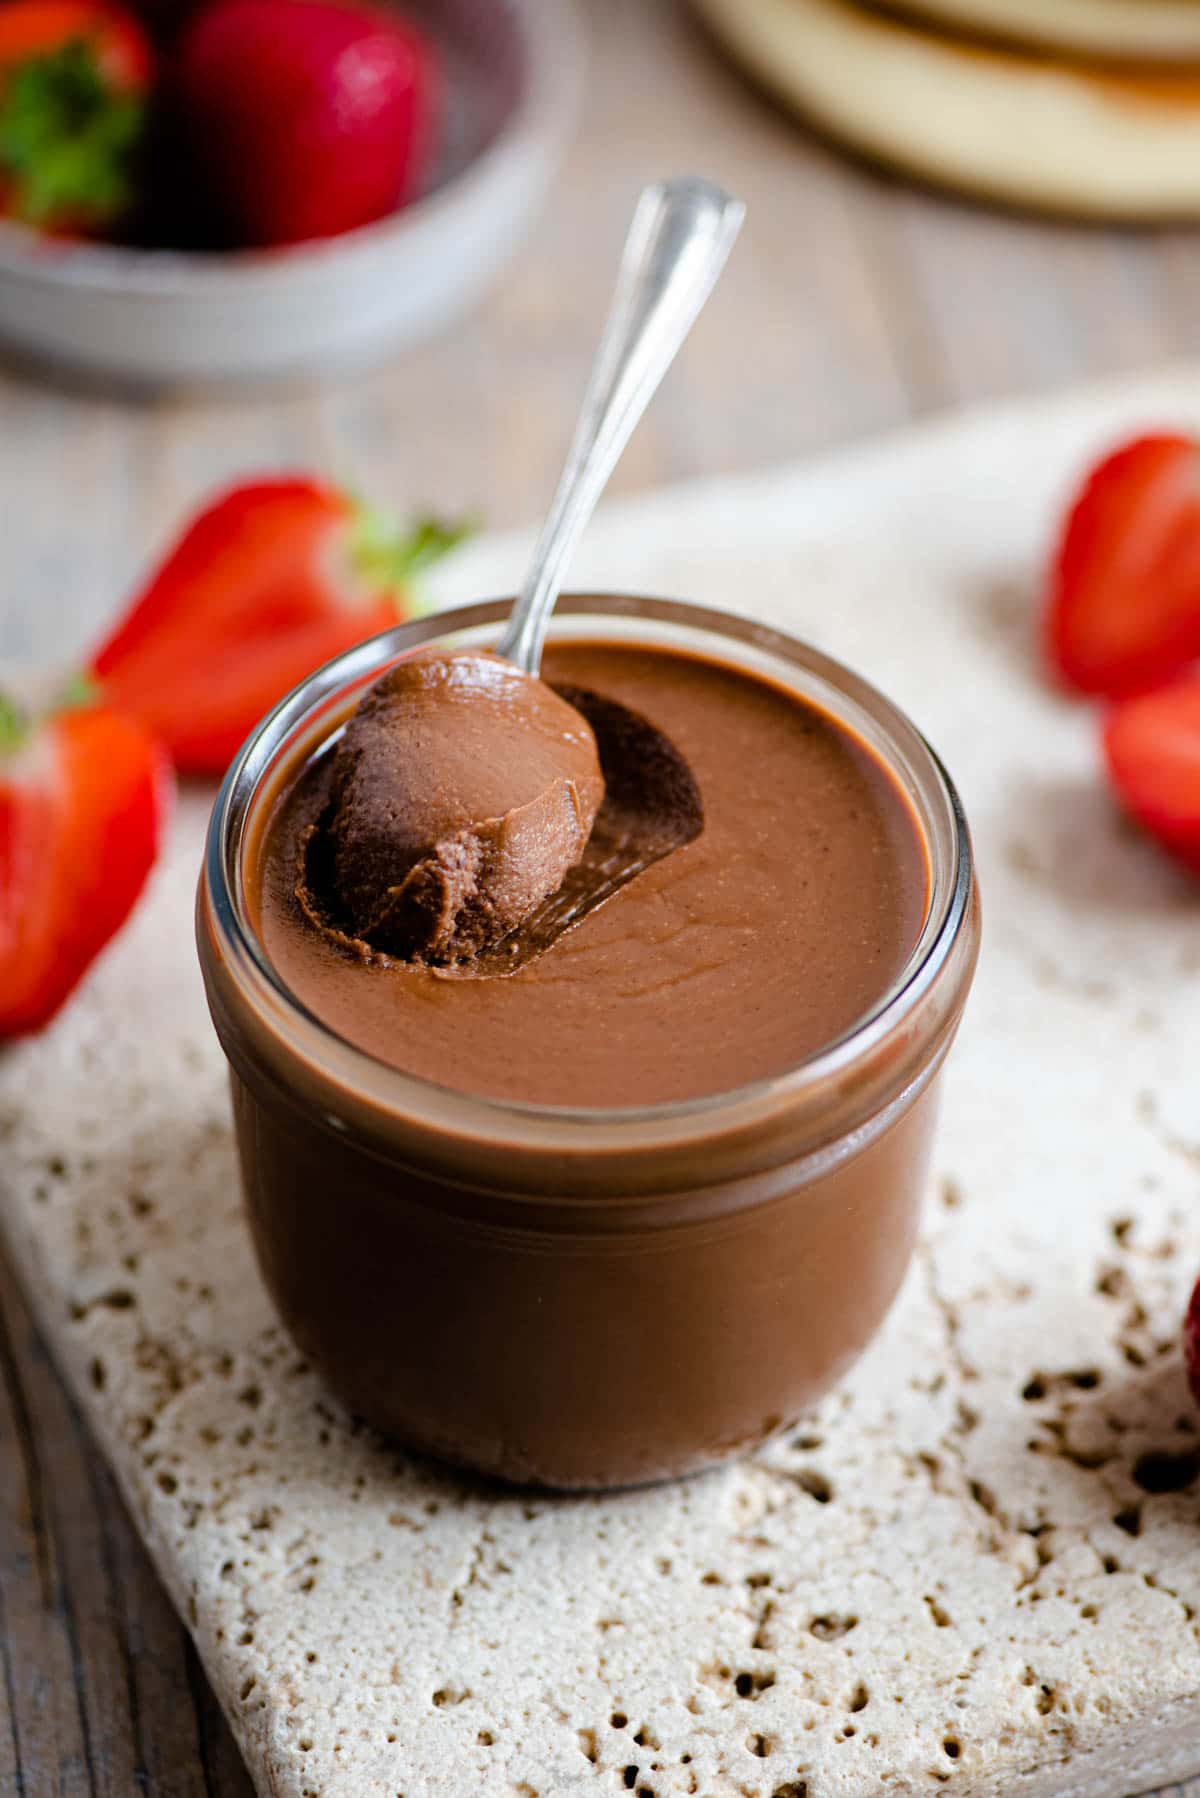 A close up of hazelnut chocolate spread in a jar